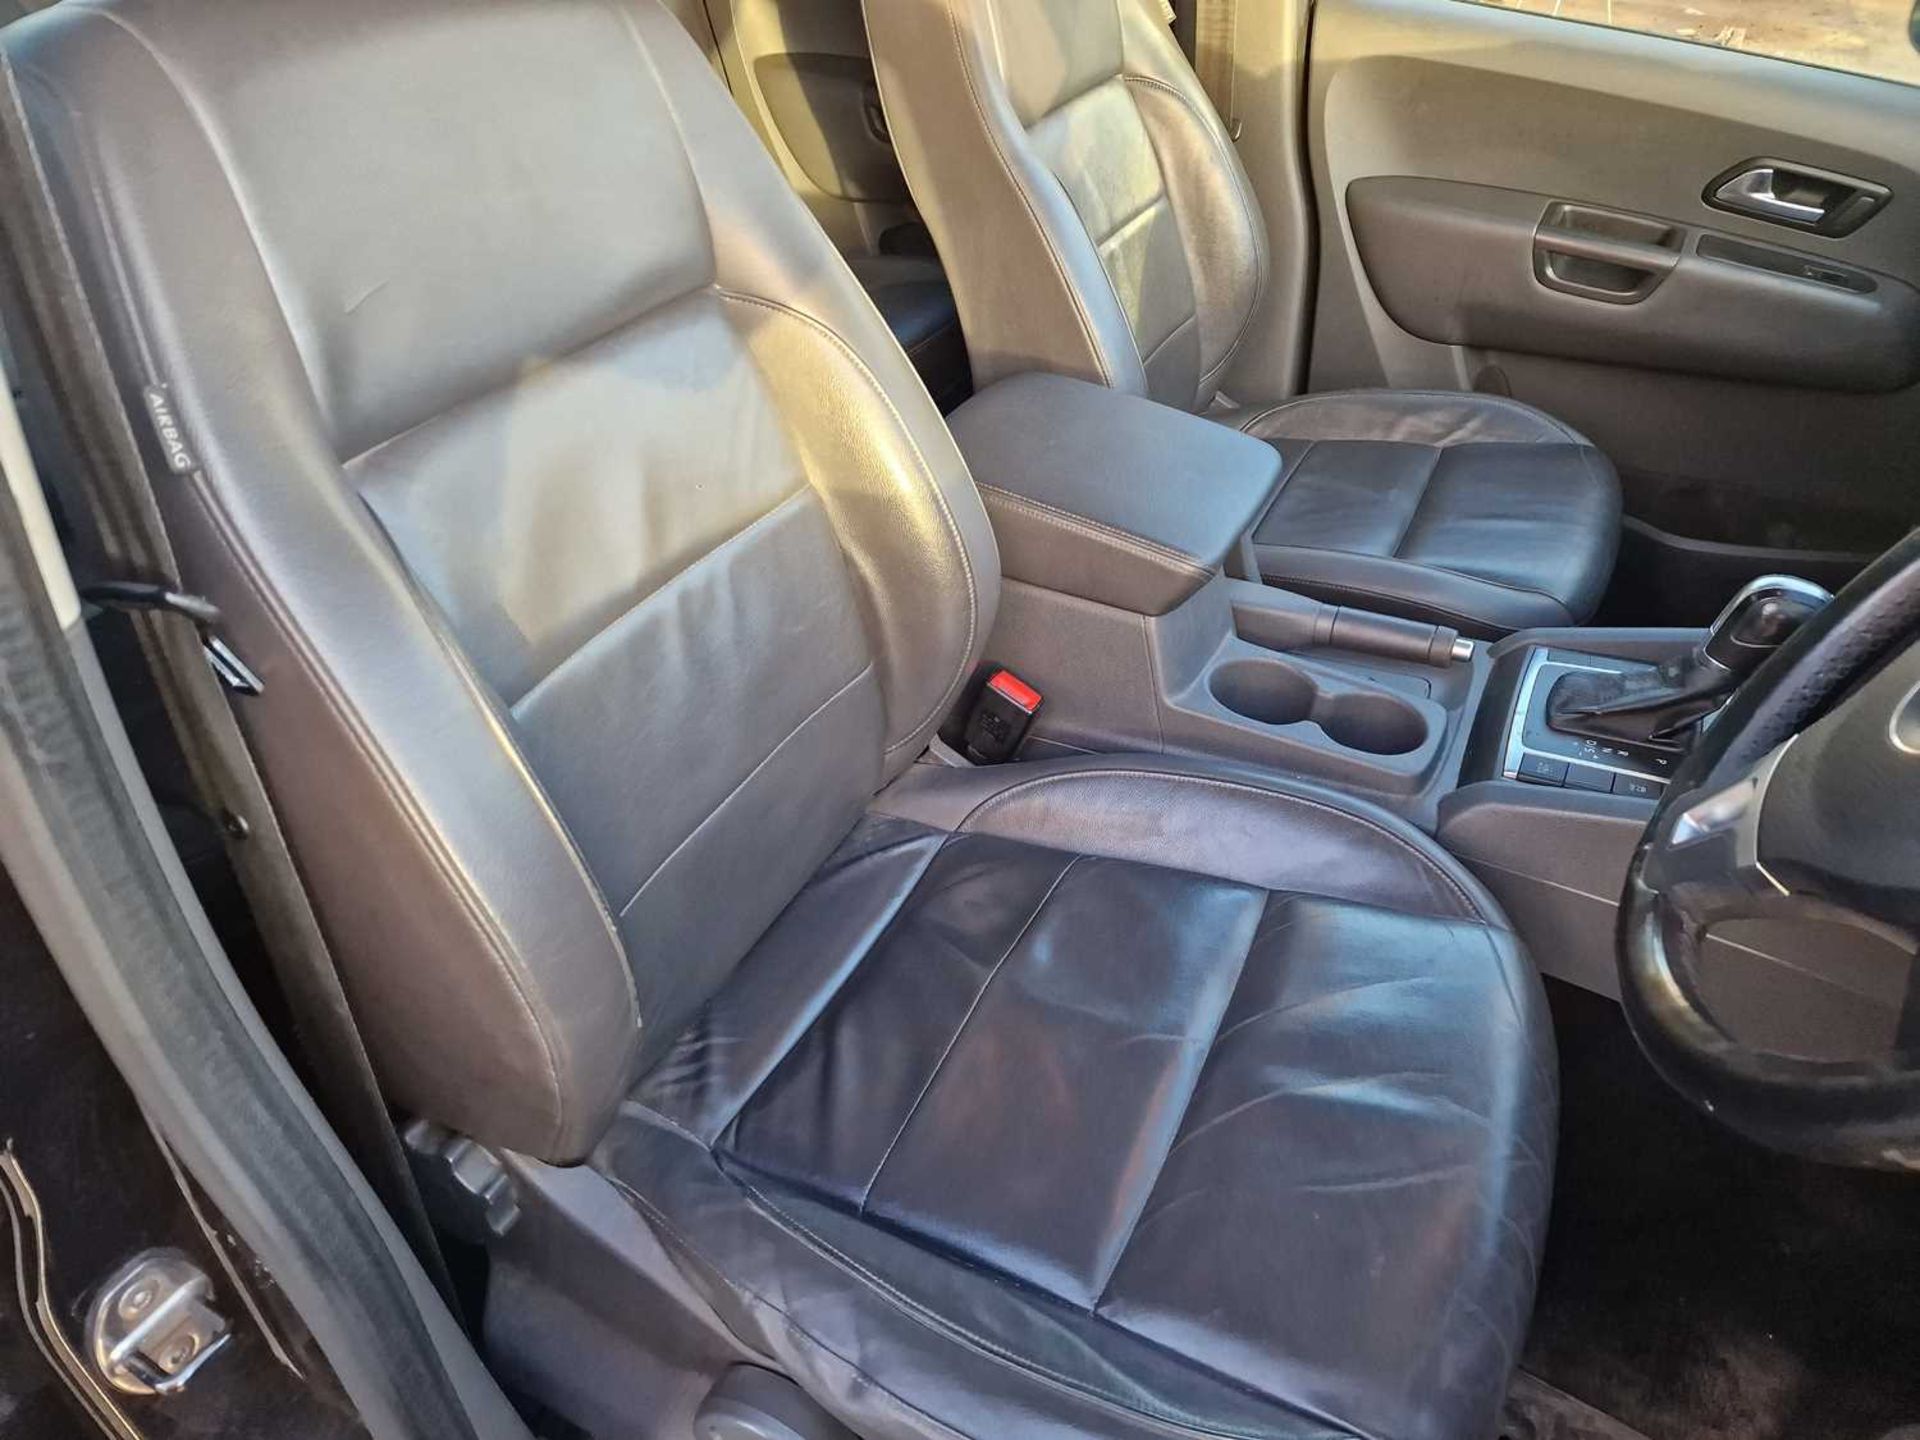 2018 VW Amarok TDI Bluemotion 4WD Crew Cab Pick Up, Auto, Sat Nav, Parking Sensors, Full Leather, He - Image 18 of 23